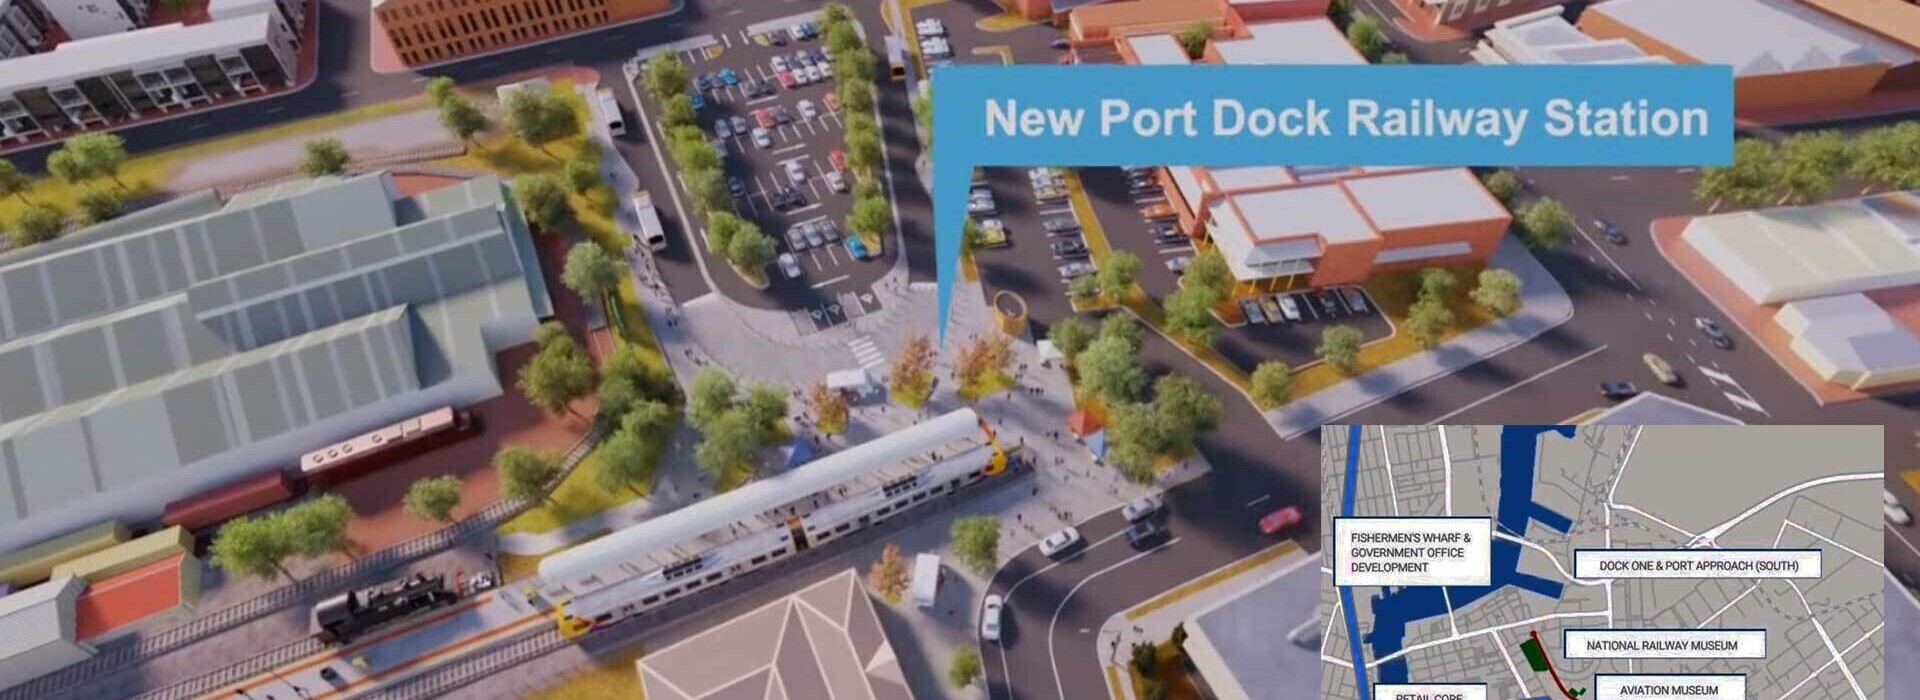 Port Dock Railway Line Project